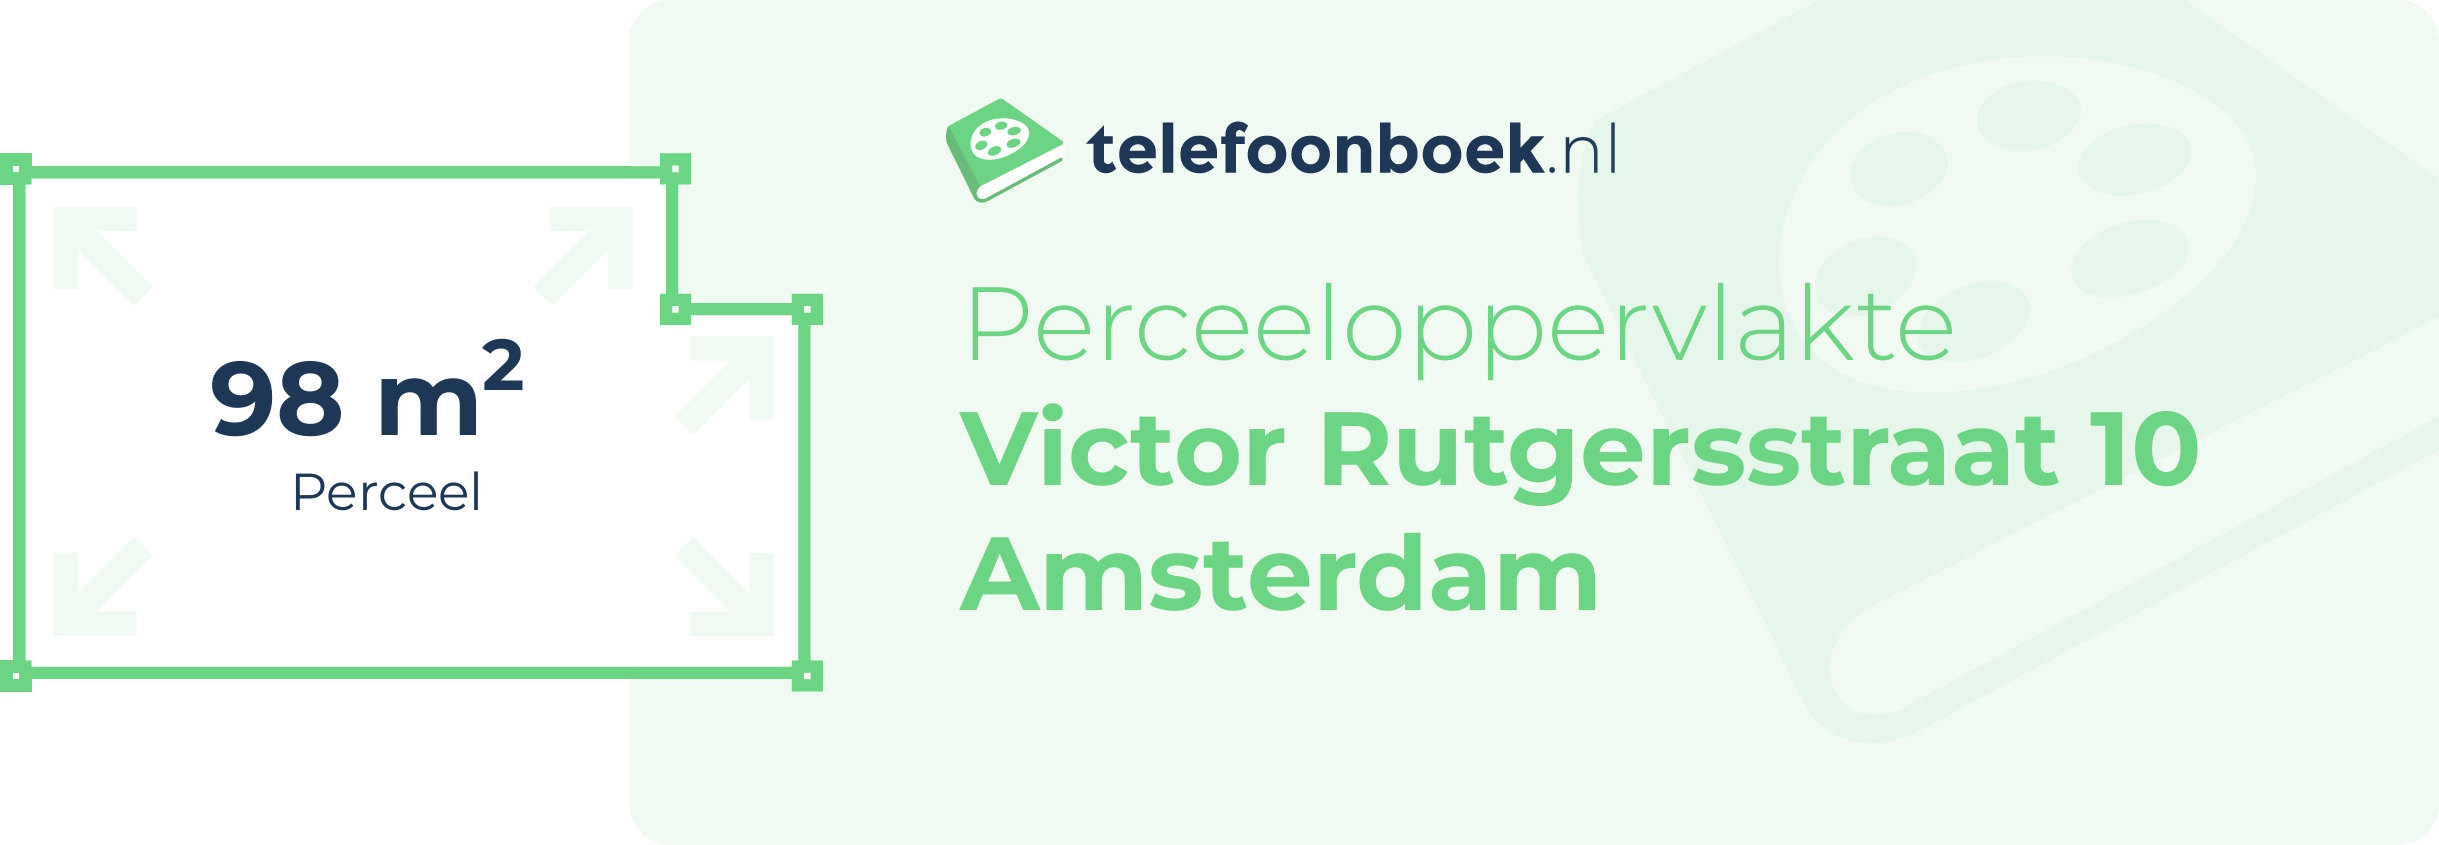 Perceeloppervlakte Victor Rutgersstraat 10 Amsterdam